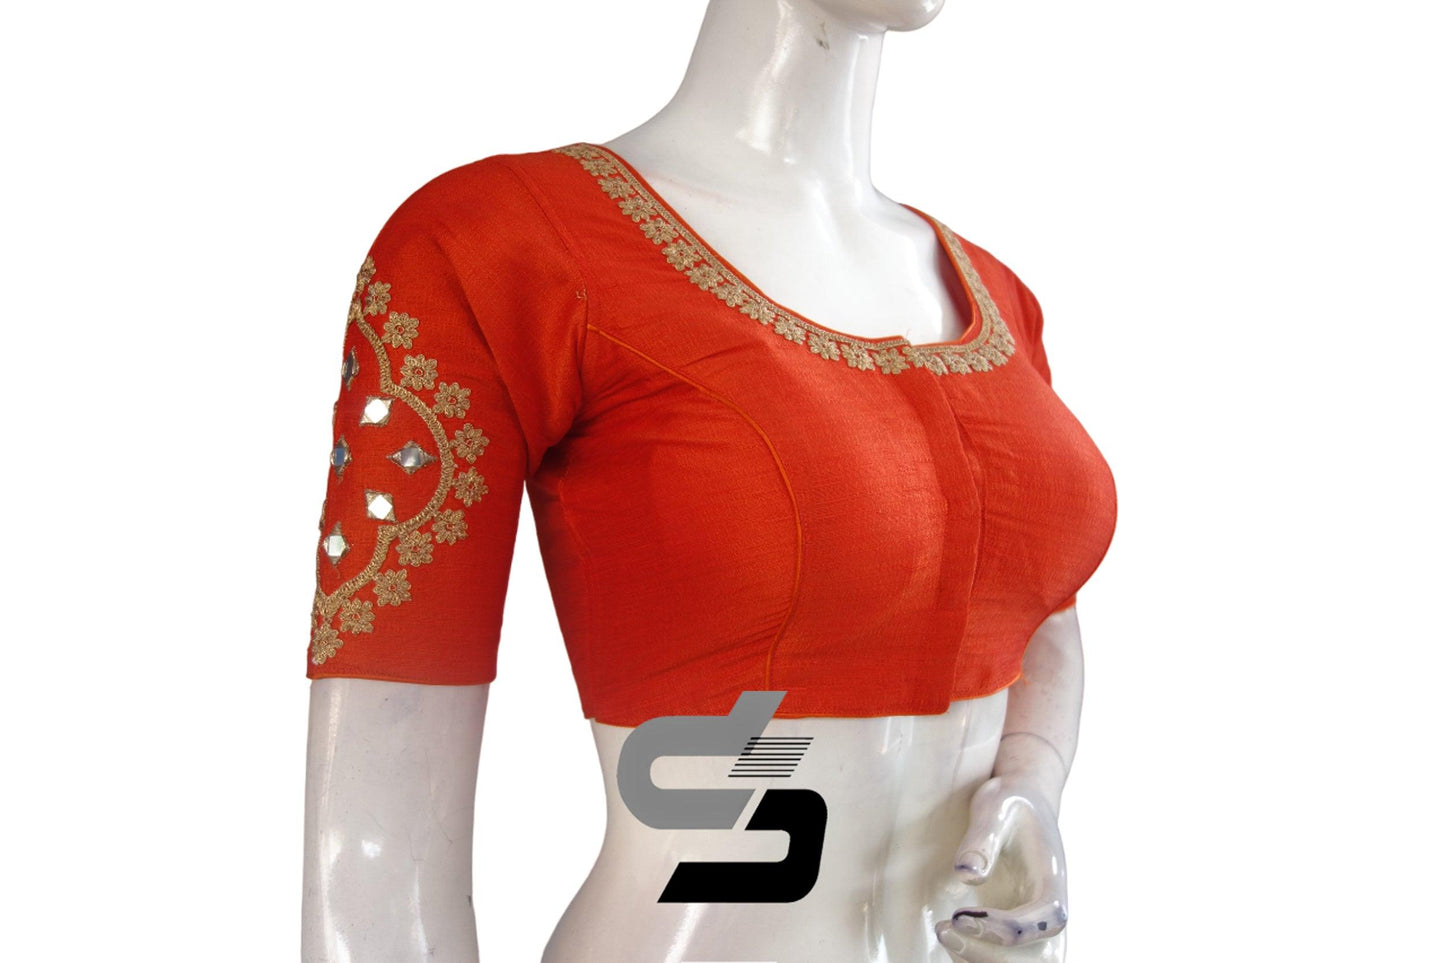 Chic Orange High Neck Embroidered Saree Blouses - Elegant Ethnic Charm